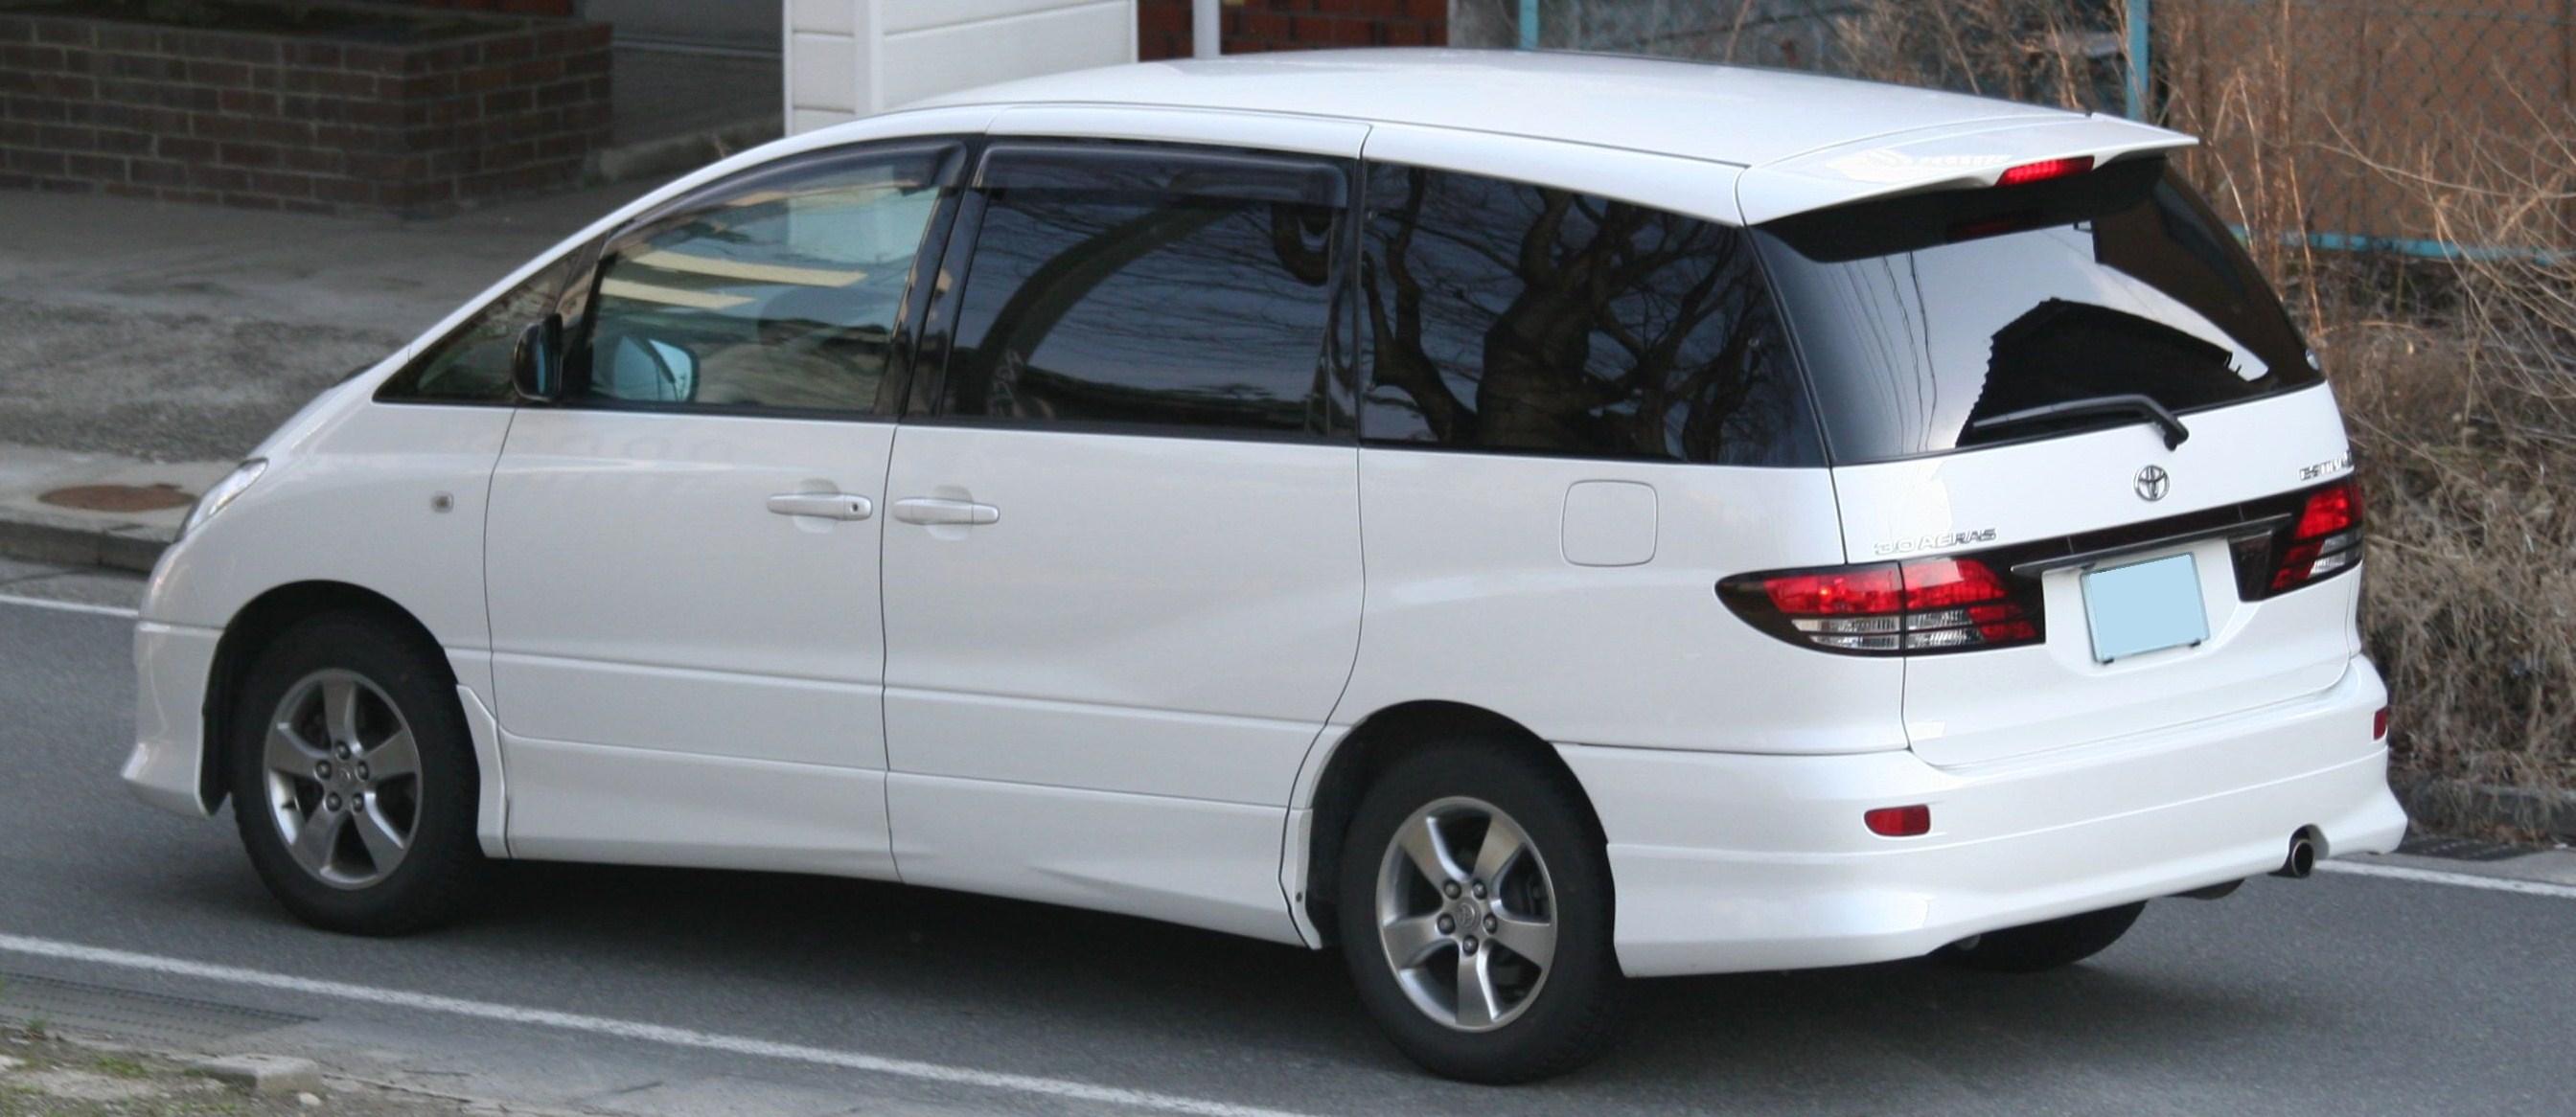 Toyota Estima 2009 Photo - 1